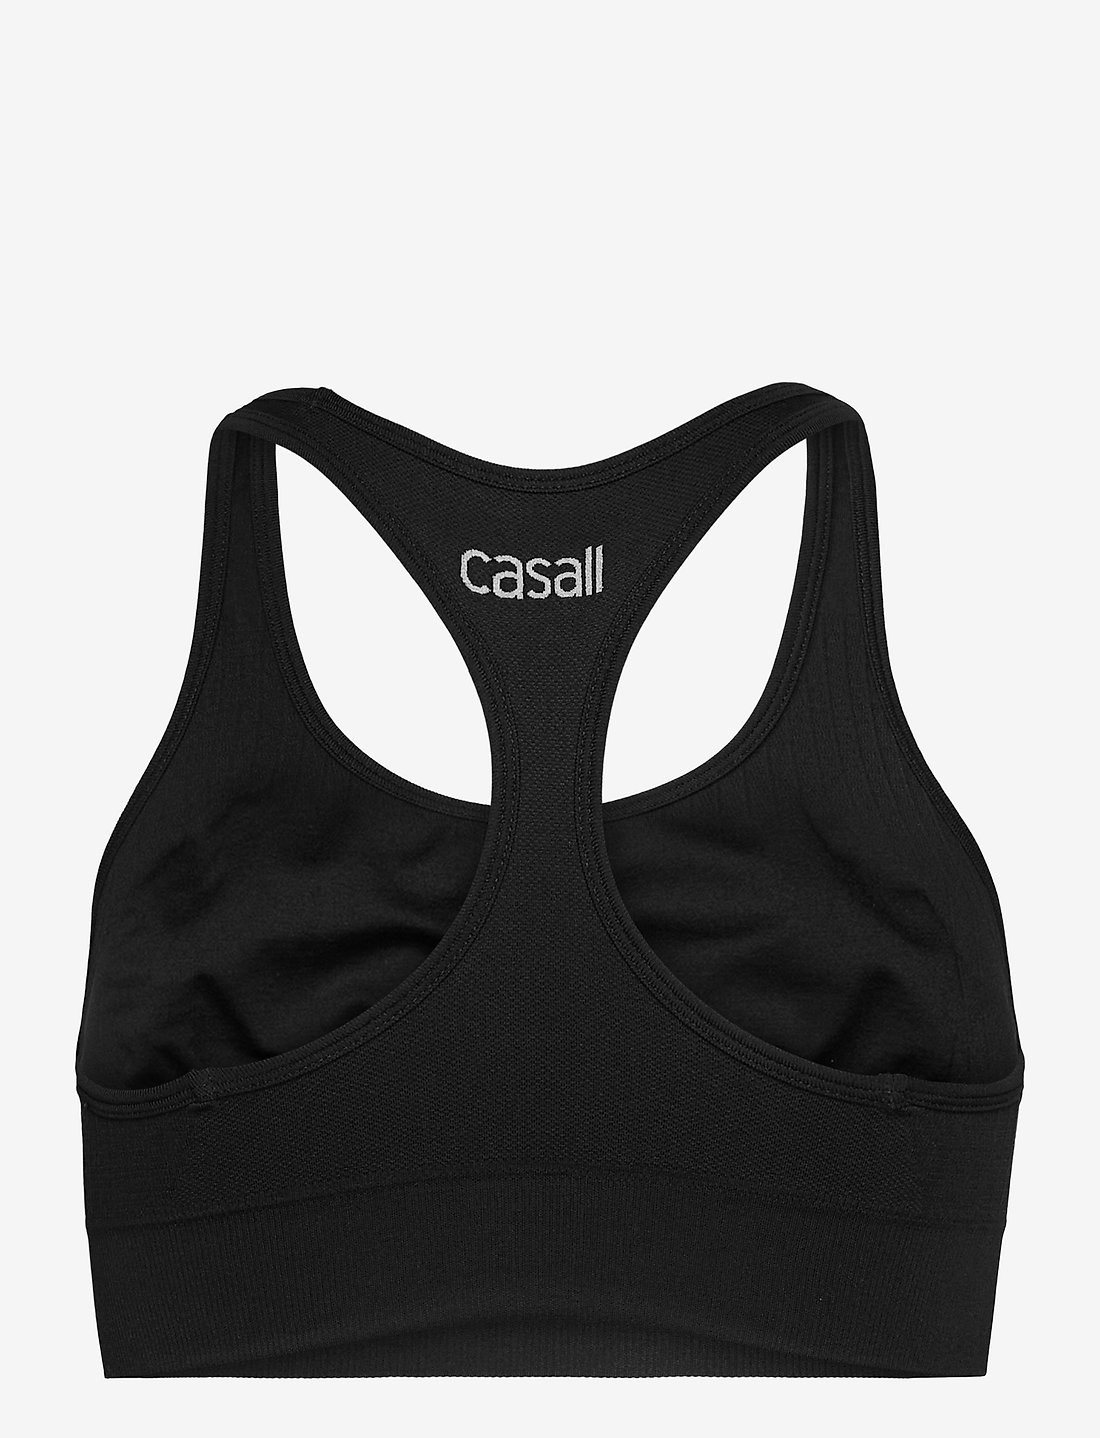 Casall Soft Sports Bra - Sports bras